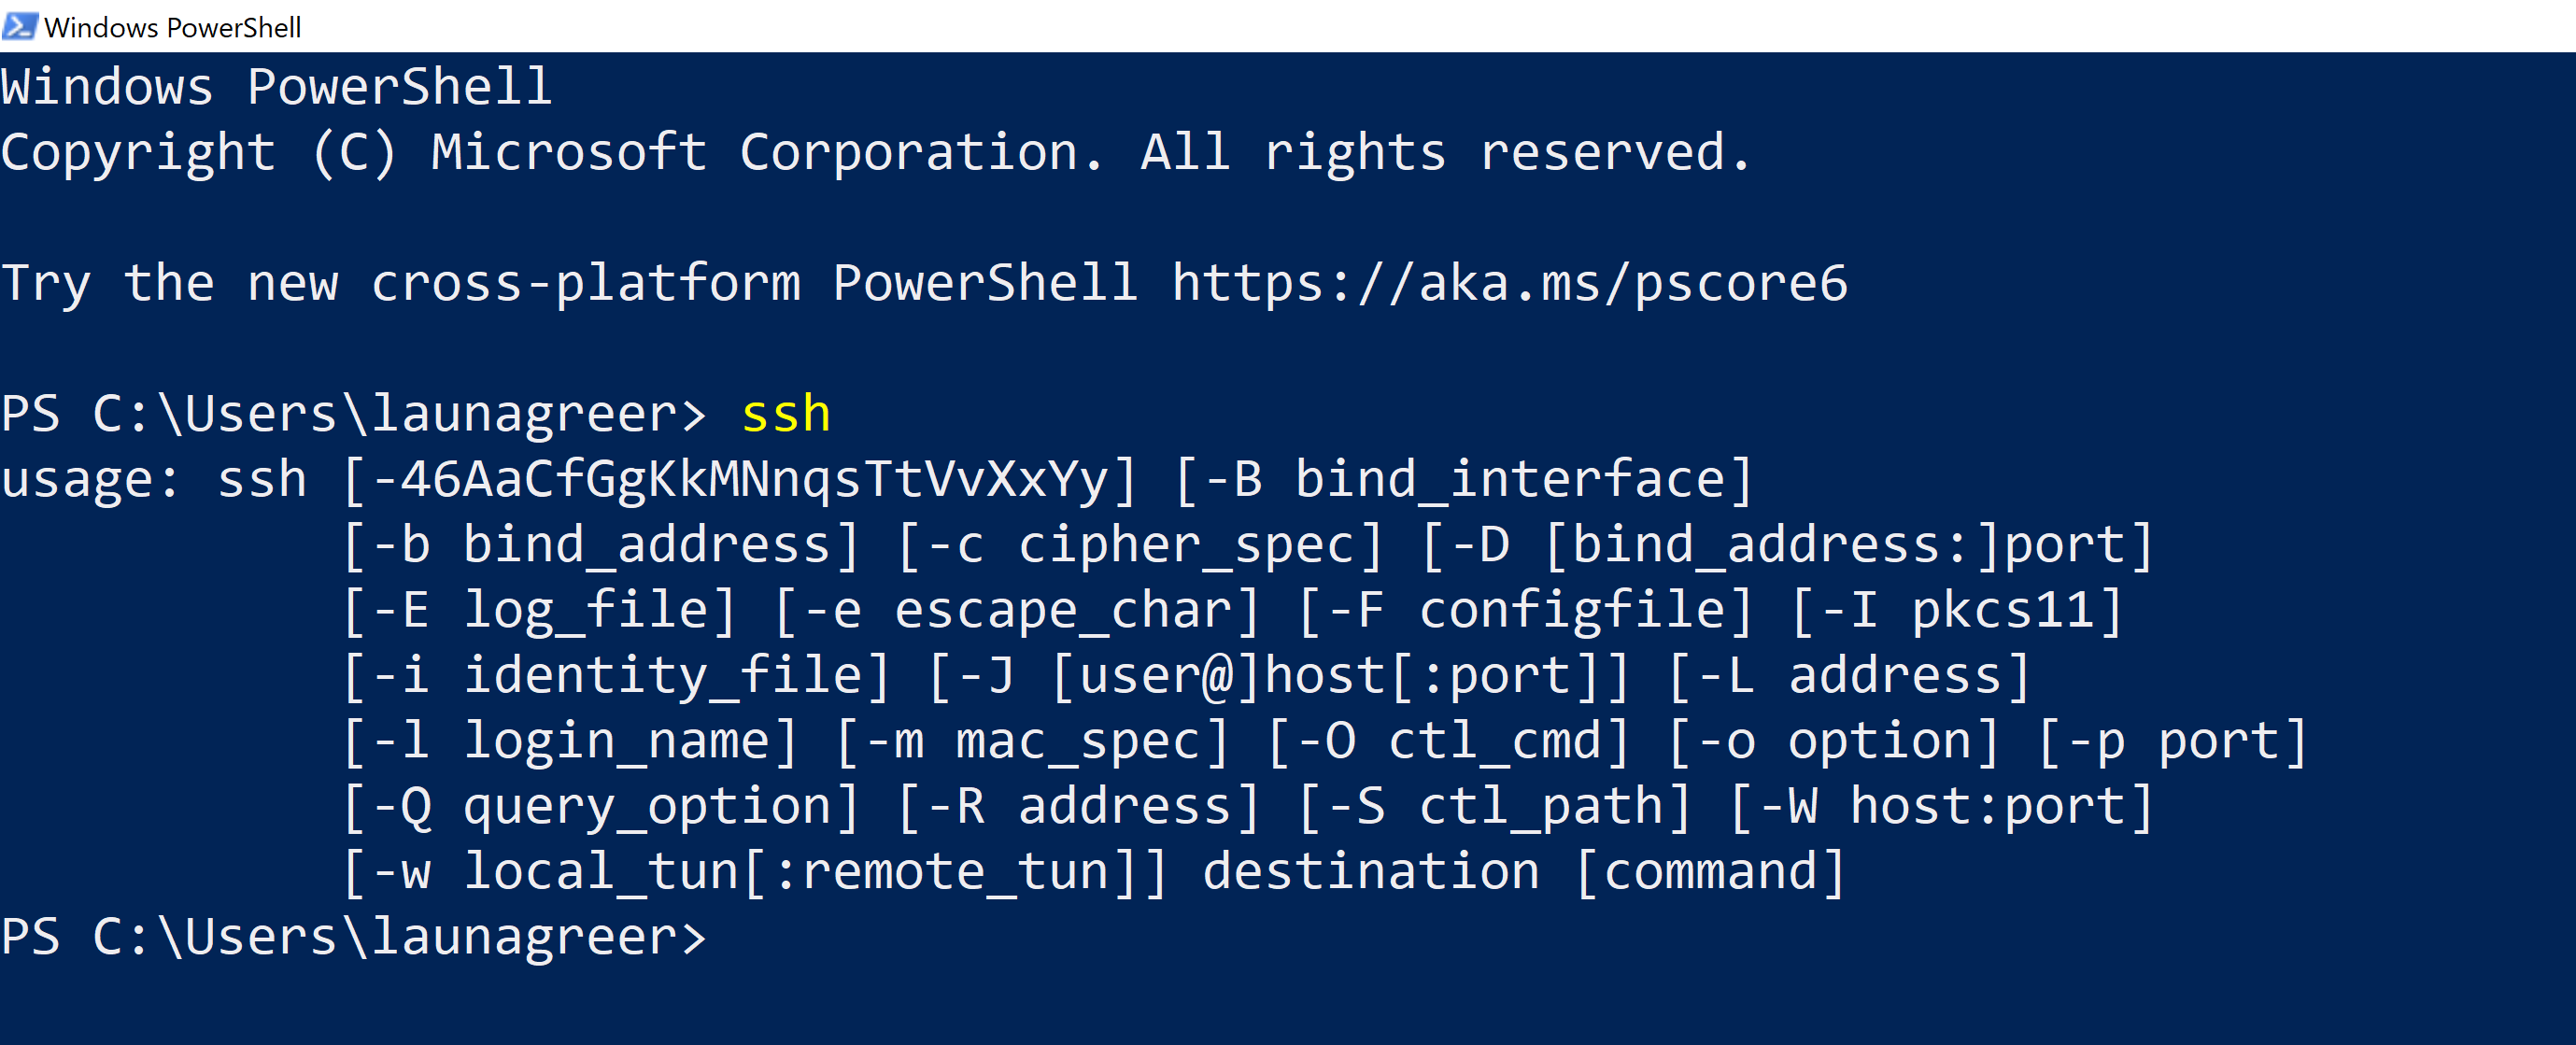 SSH command check screenshot - Windows